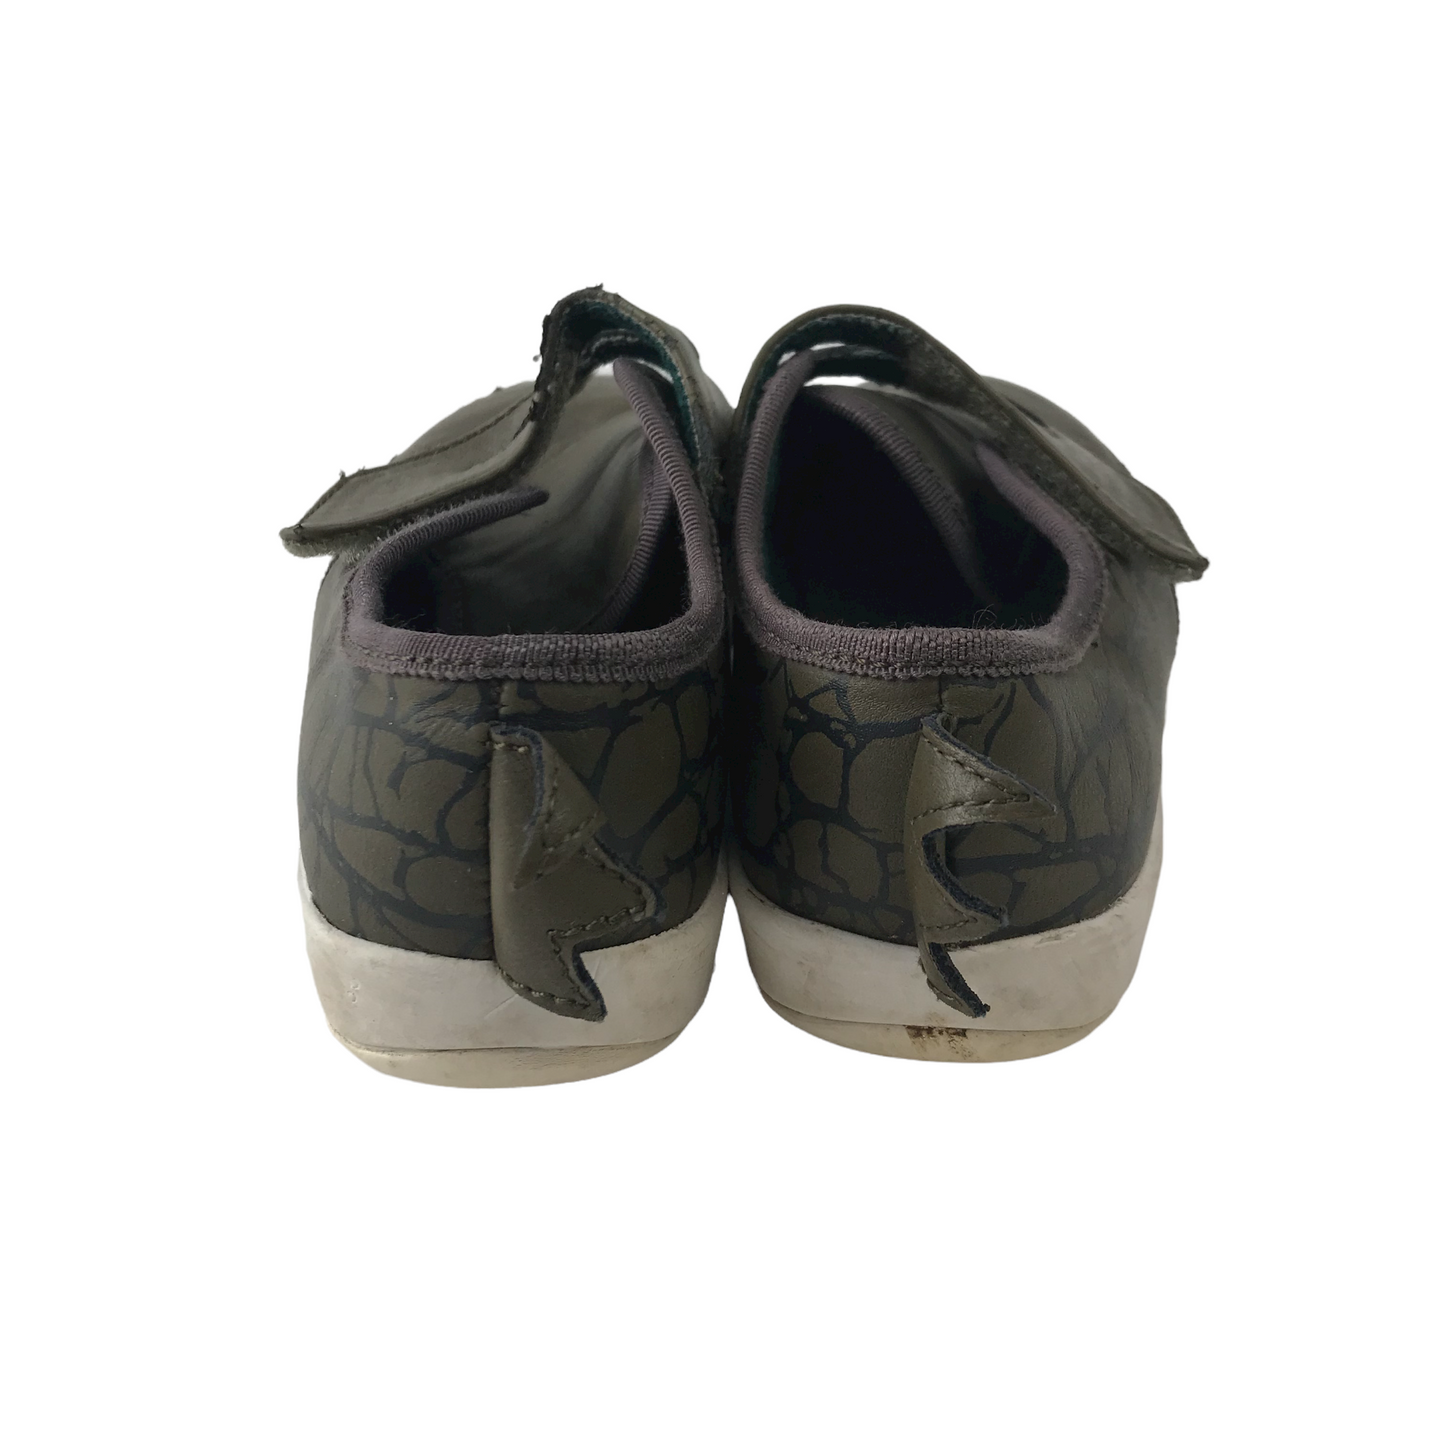 EMU Australia Khaki Green Crocodile Trainers Shoe Size 10 (jr)